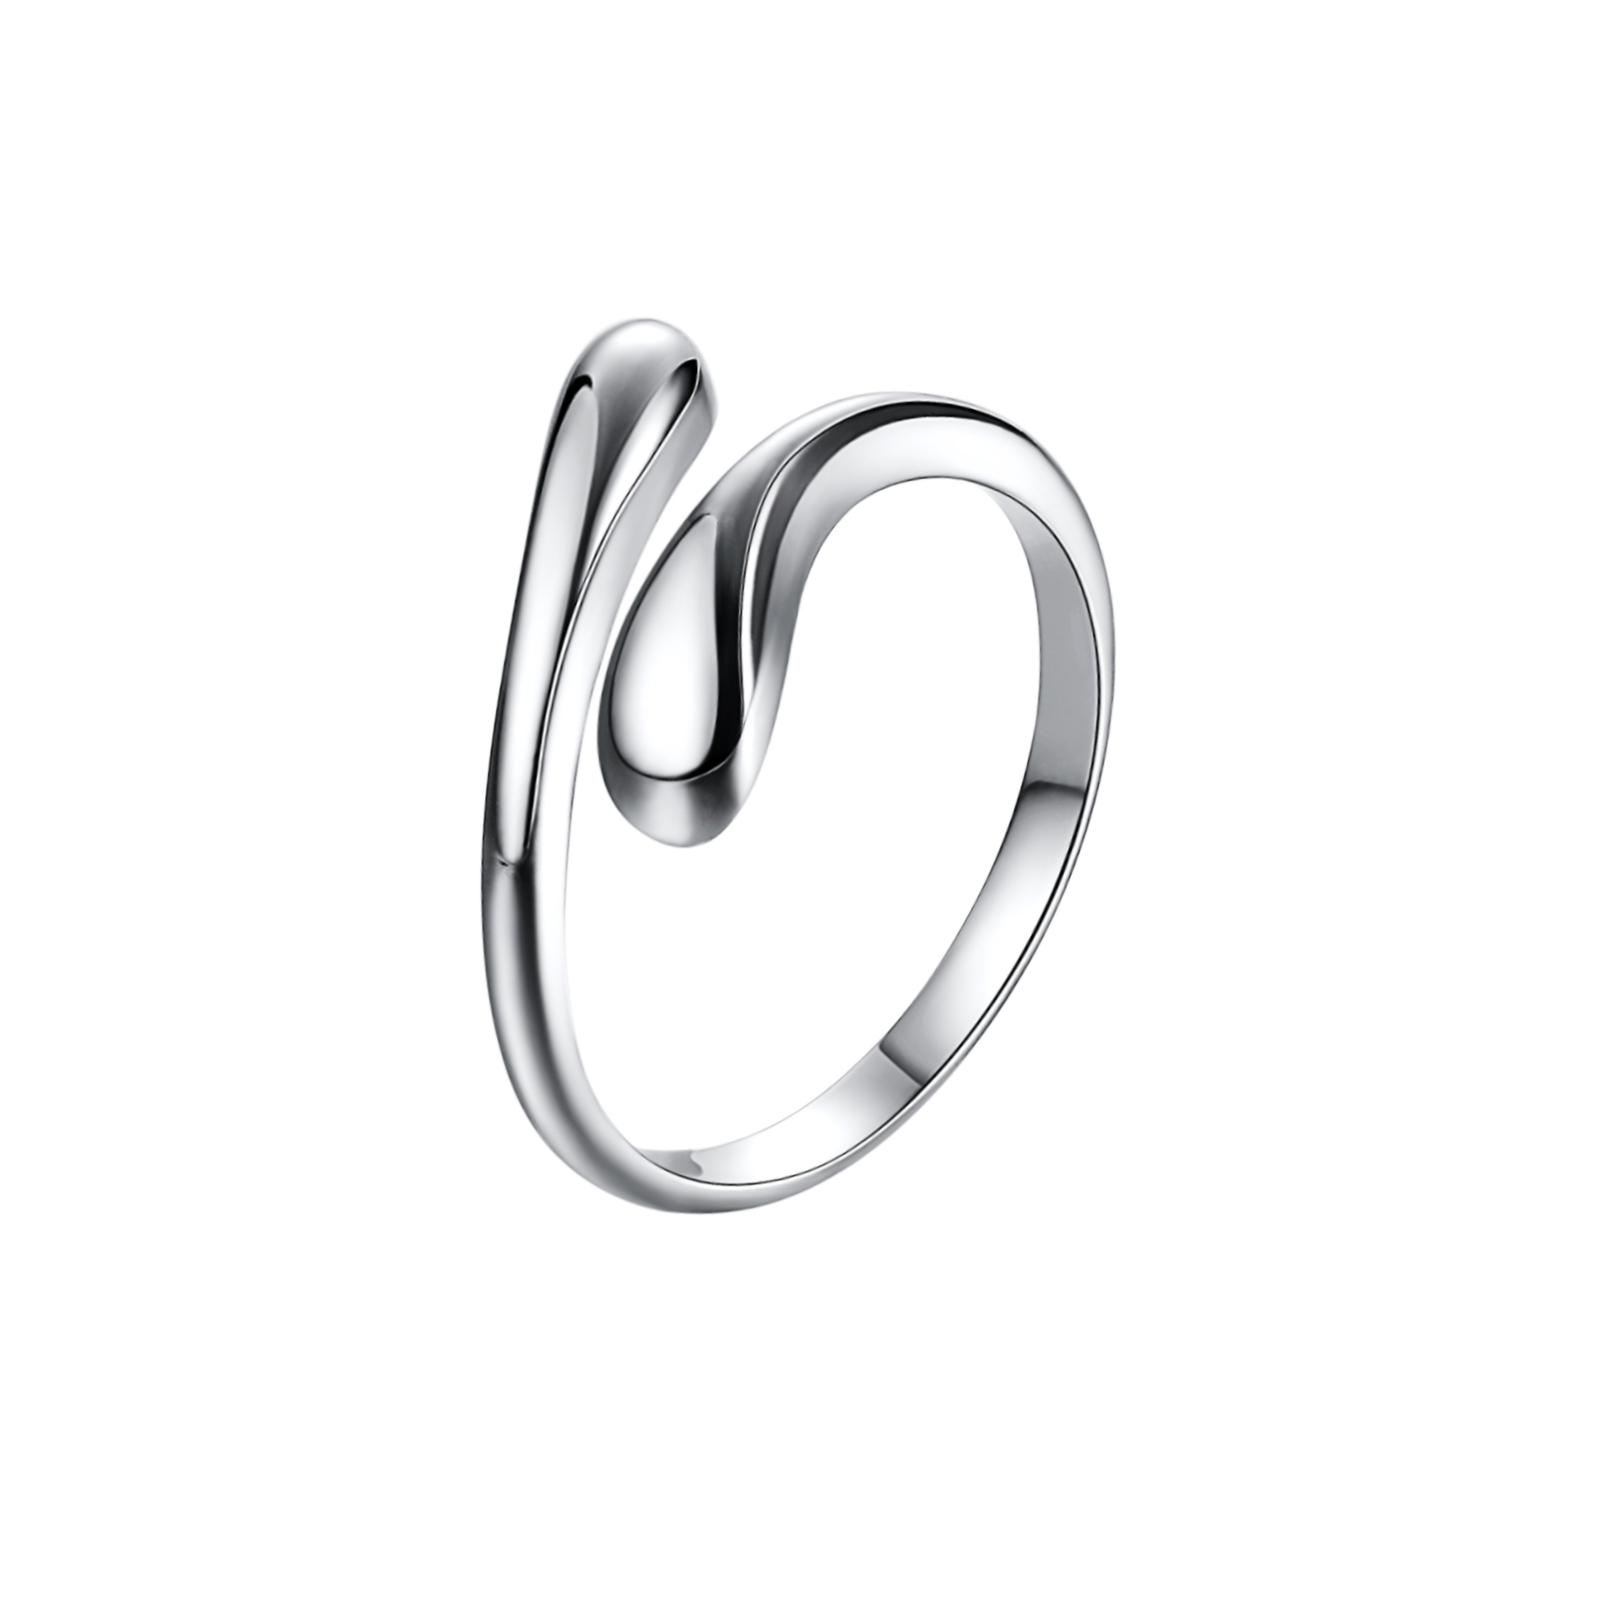 ChicSilver 925 Sterling Silver Ring Minimalist Teardrop Ring For Women